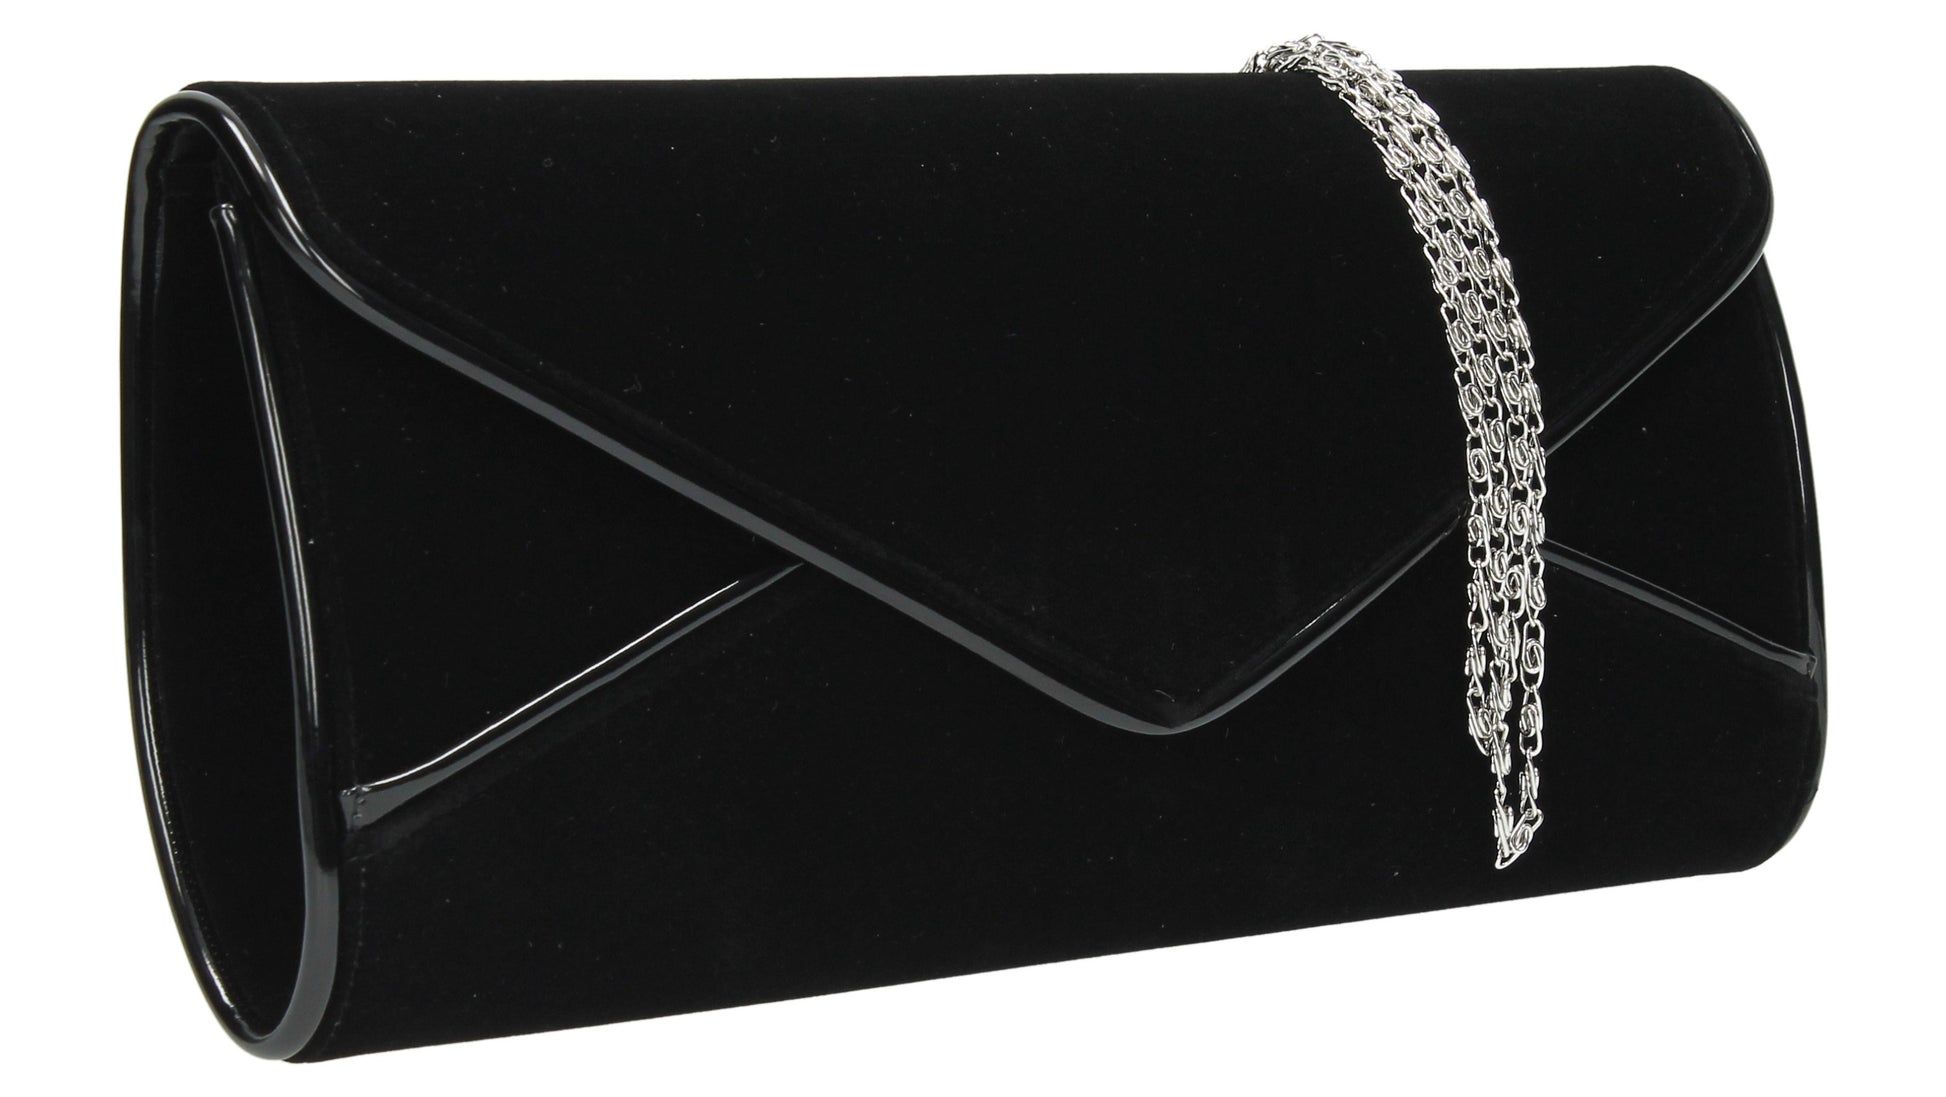 SWANKYSWANS Perry Velvet Clutch Bag - Black Cute Cheap Clutch Bag For Weddings School and Work